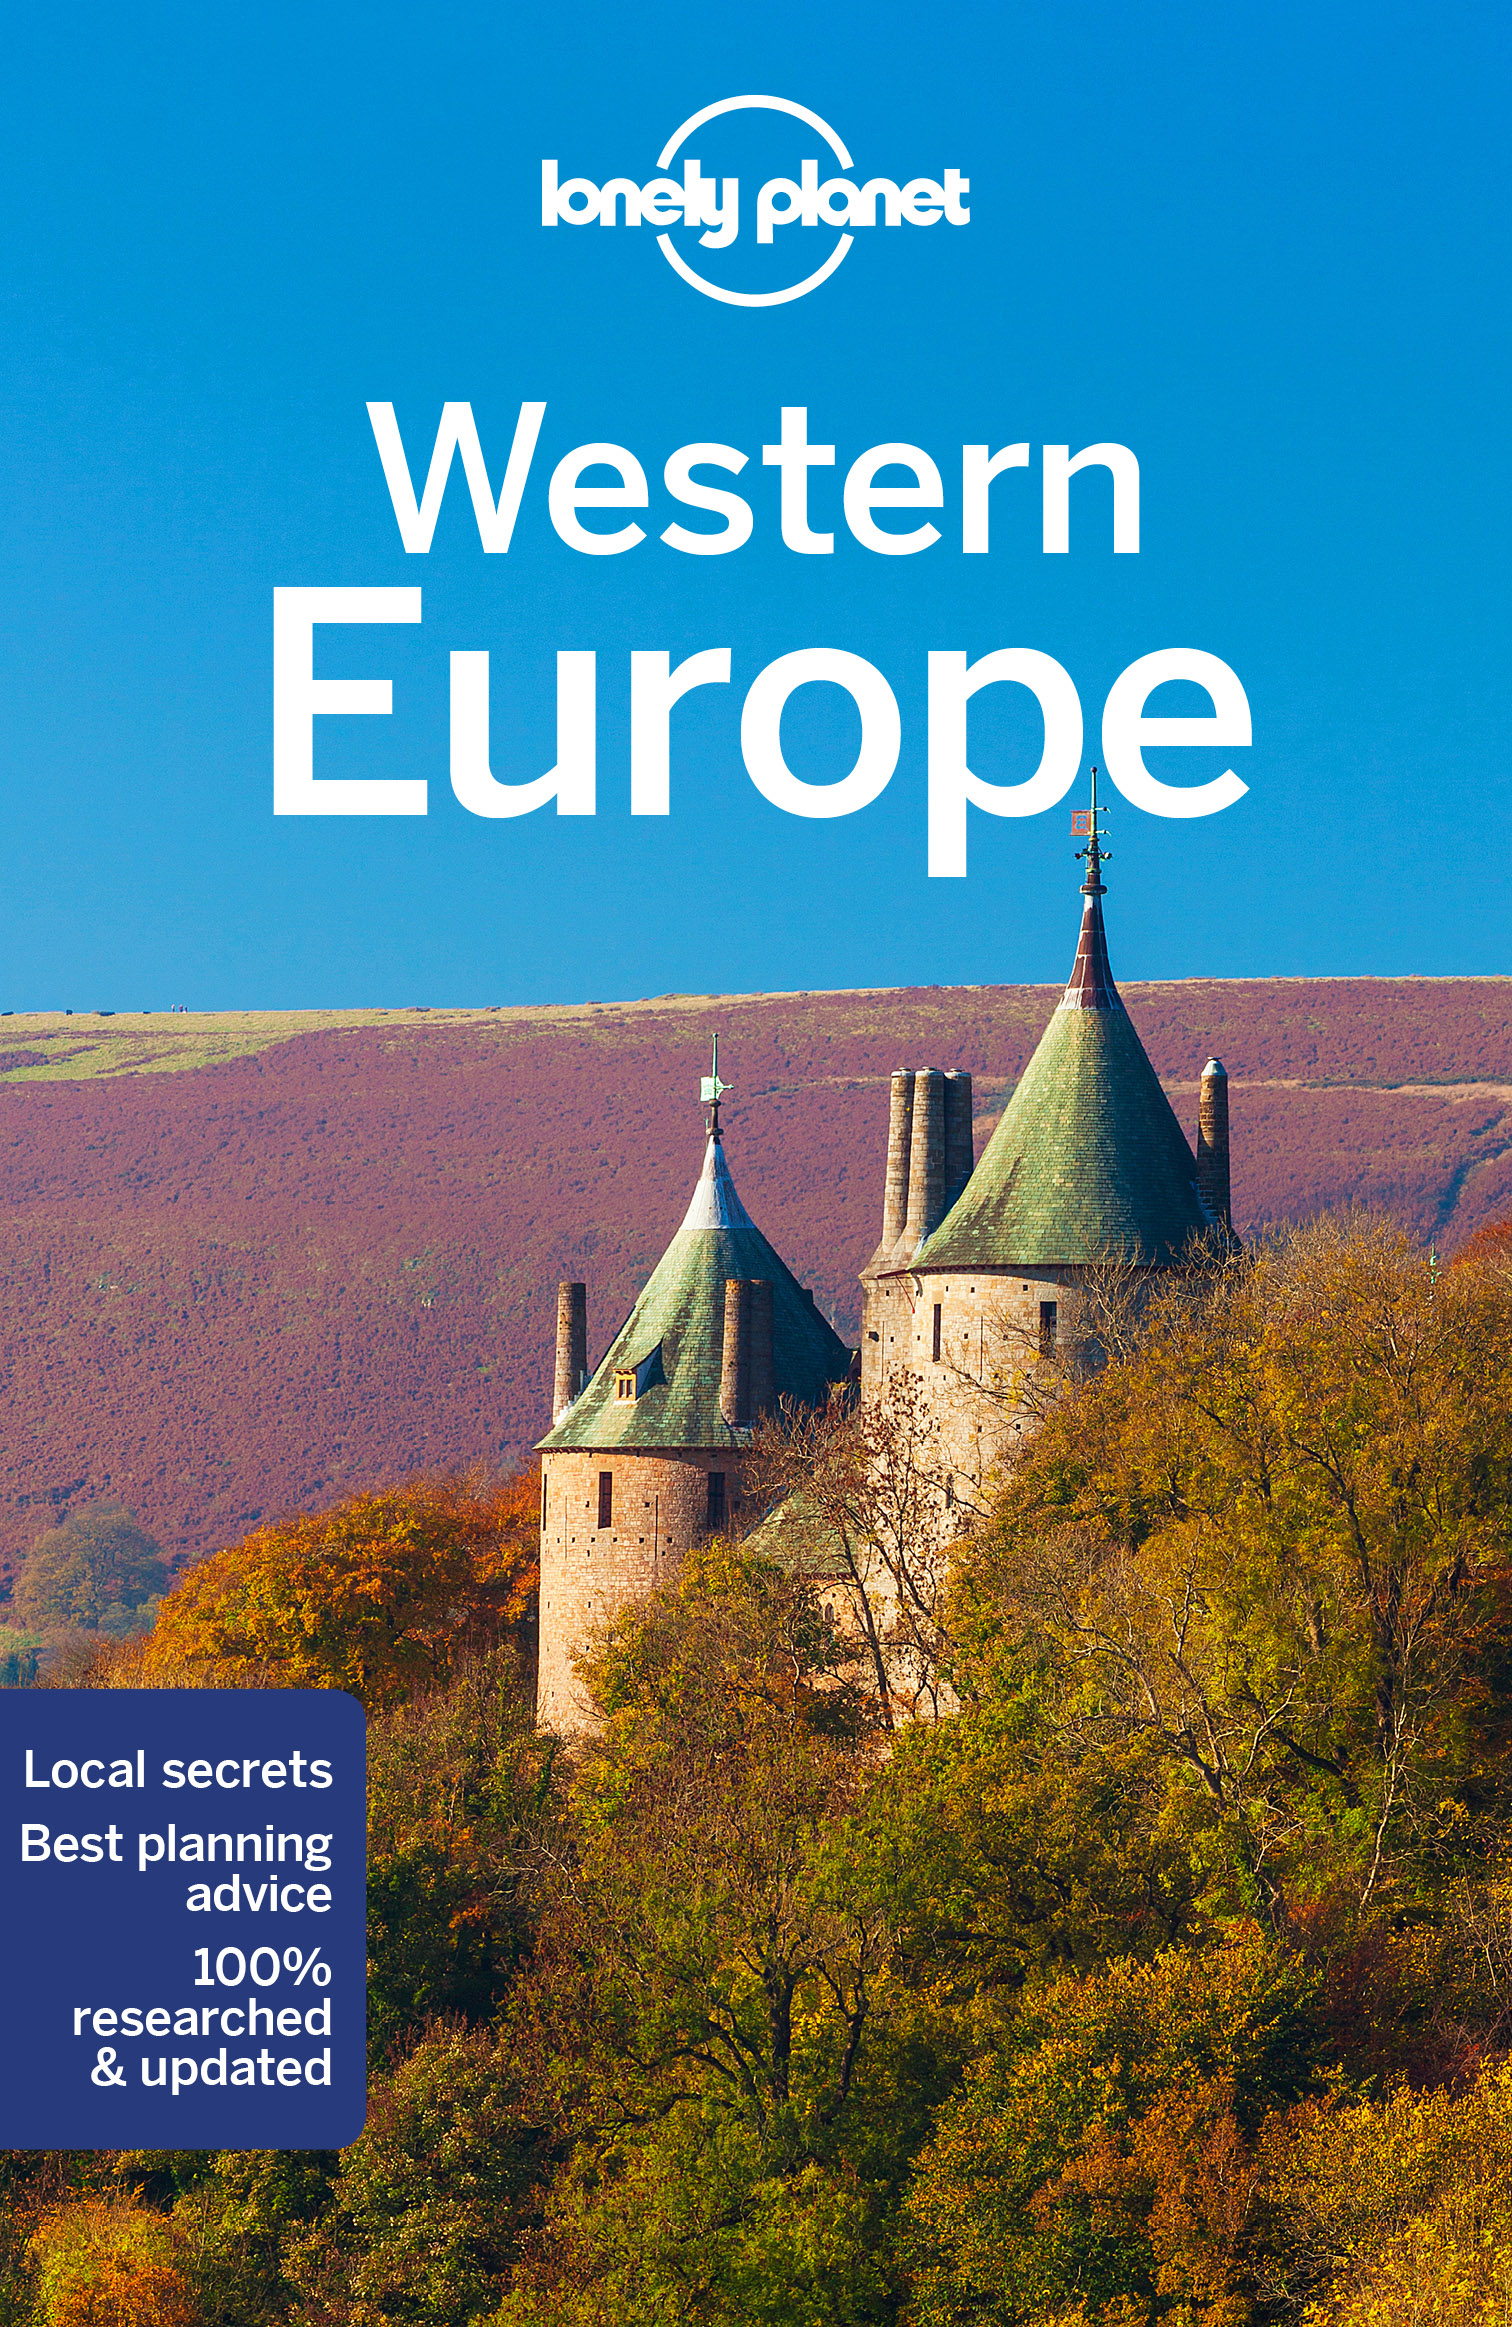 průvodce Western Europe 15. edice anglicky Lonely Planet